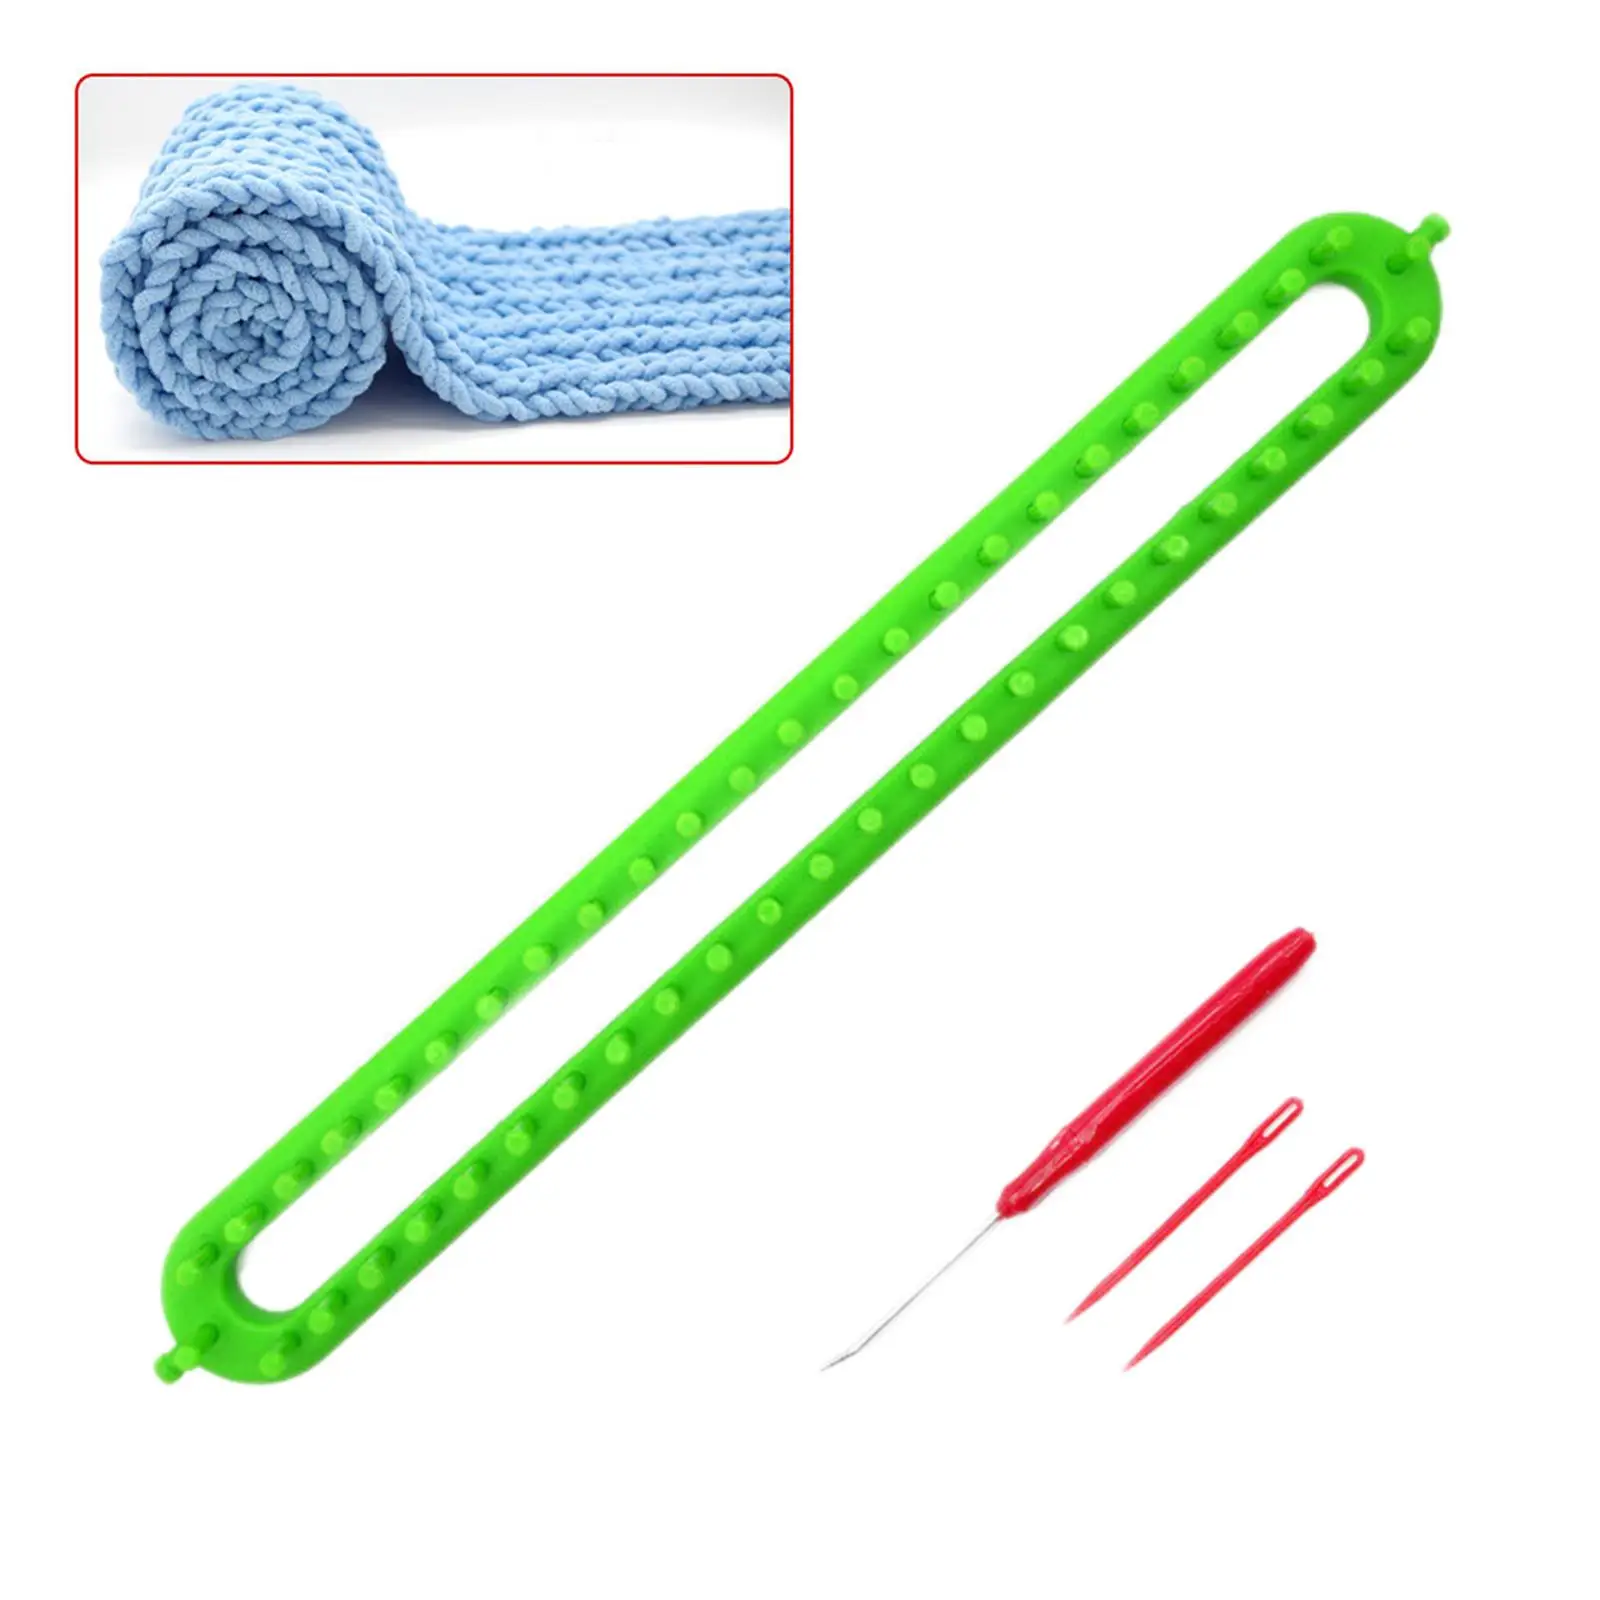 Plastic Knitting Loom Kit Sewing Tools DIY Crochet Weaving Handmade Machine Needle Knitter for Beginners Shawl Blankets